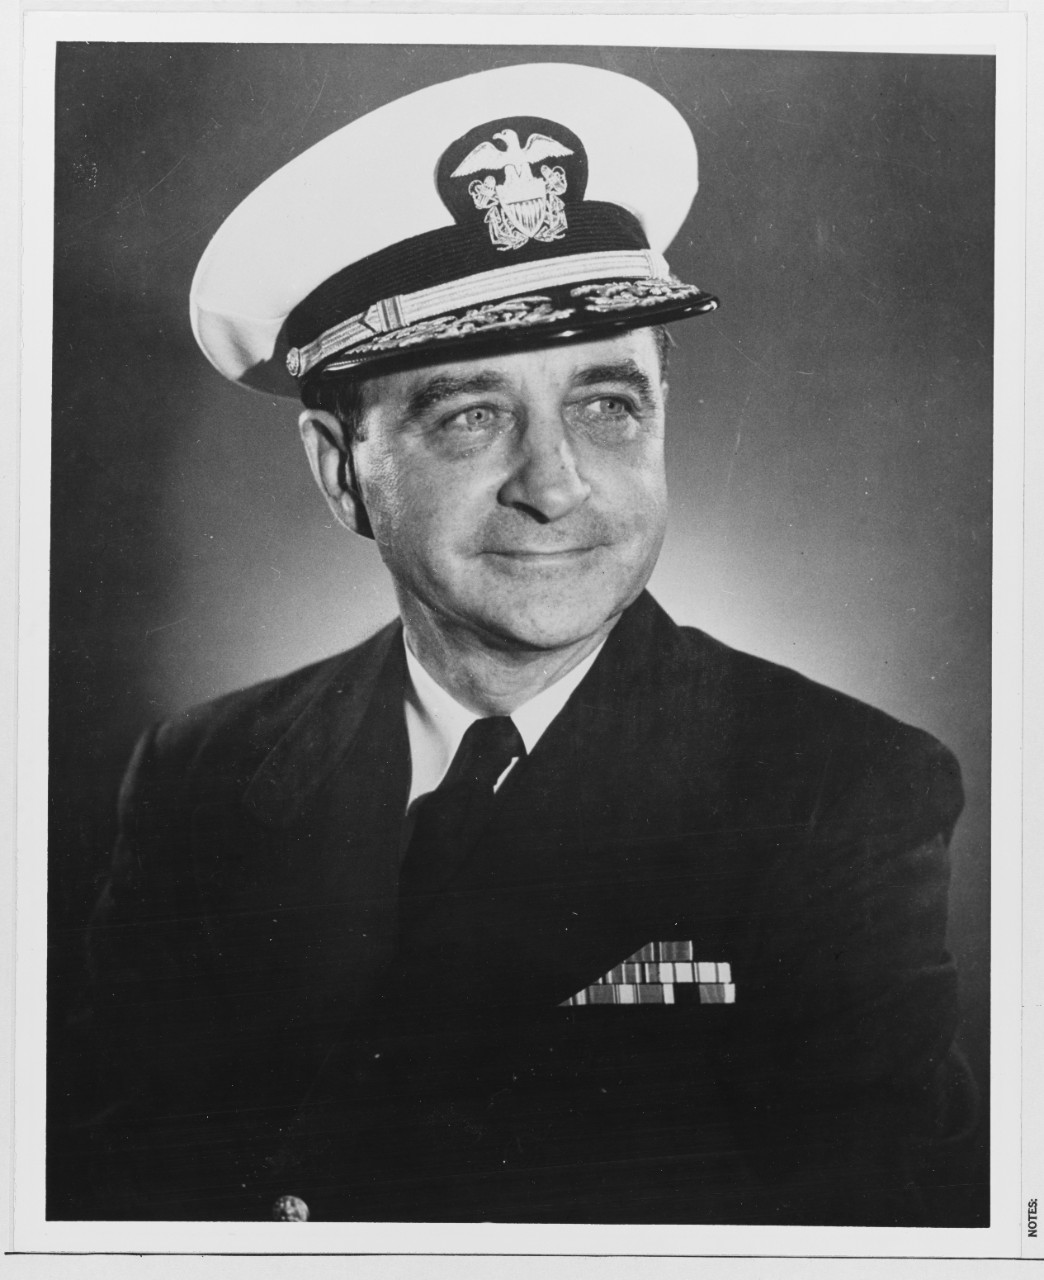 Rear Admiral Charles E. Weakley